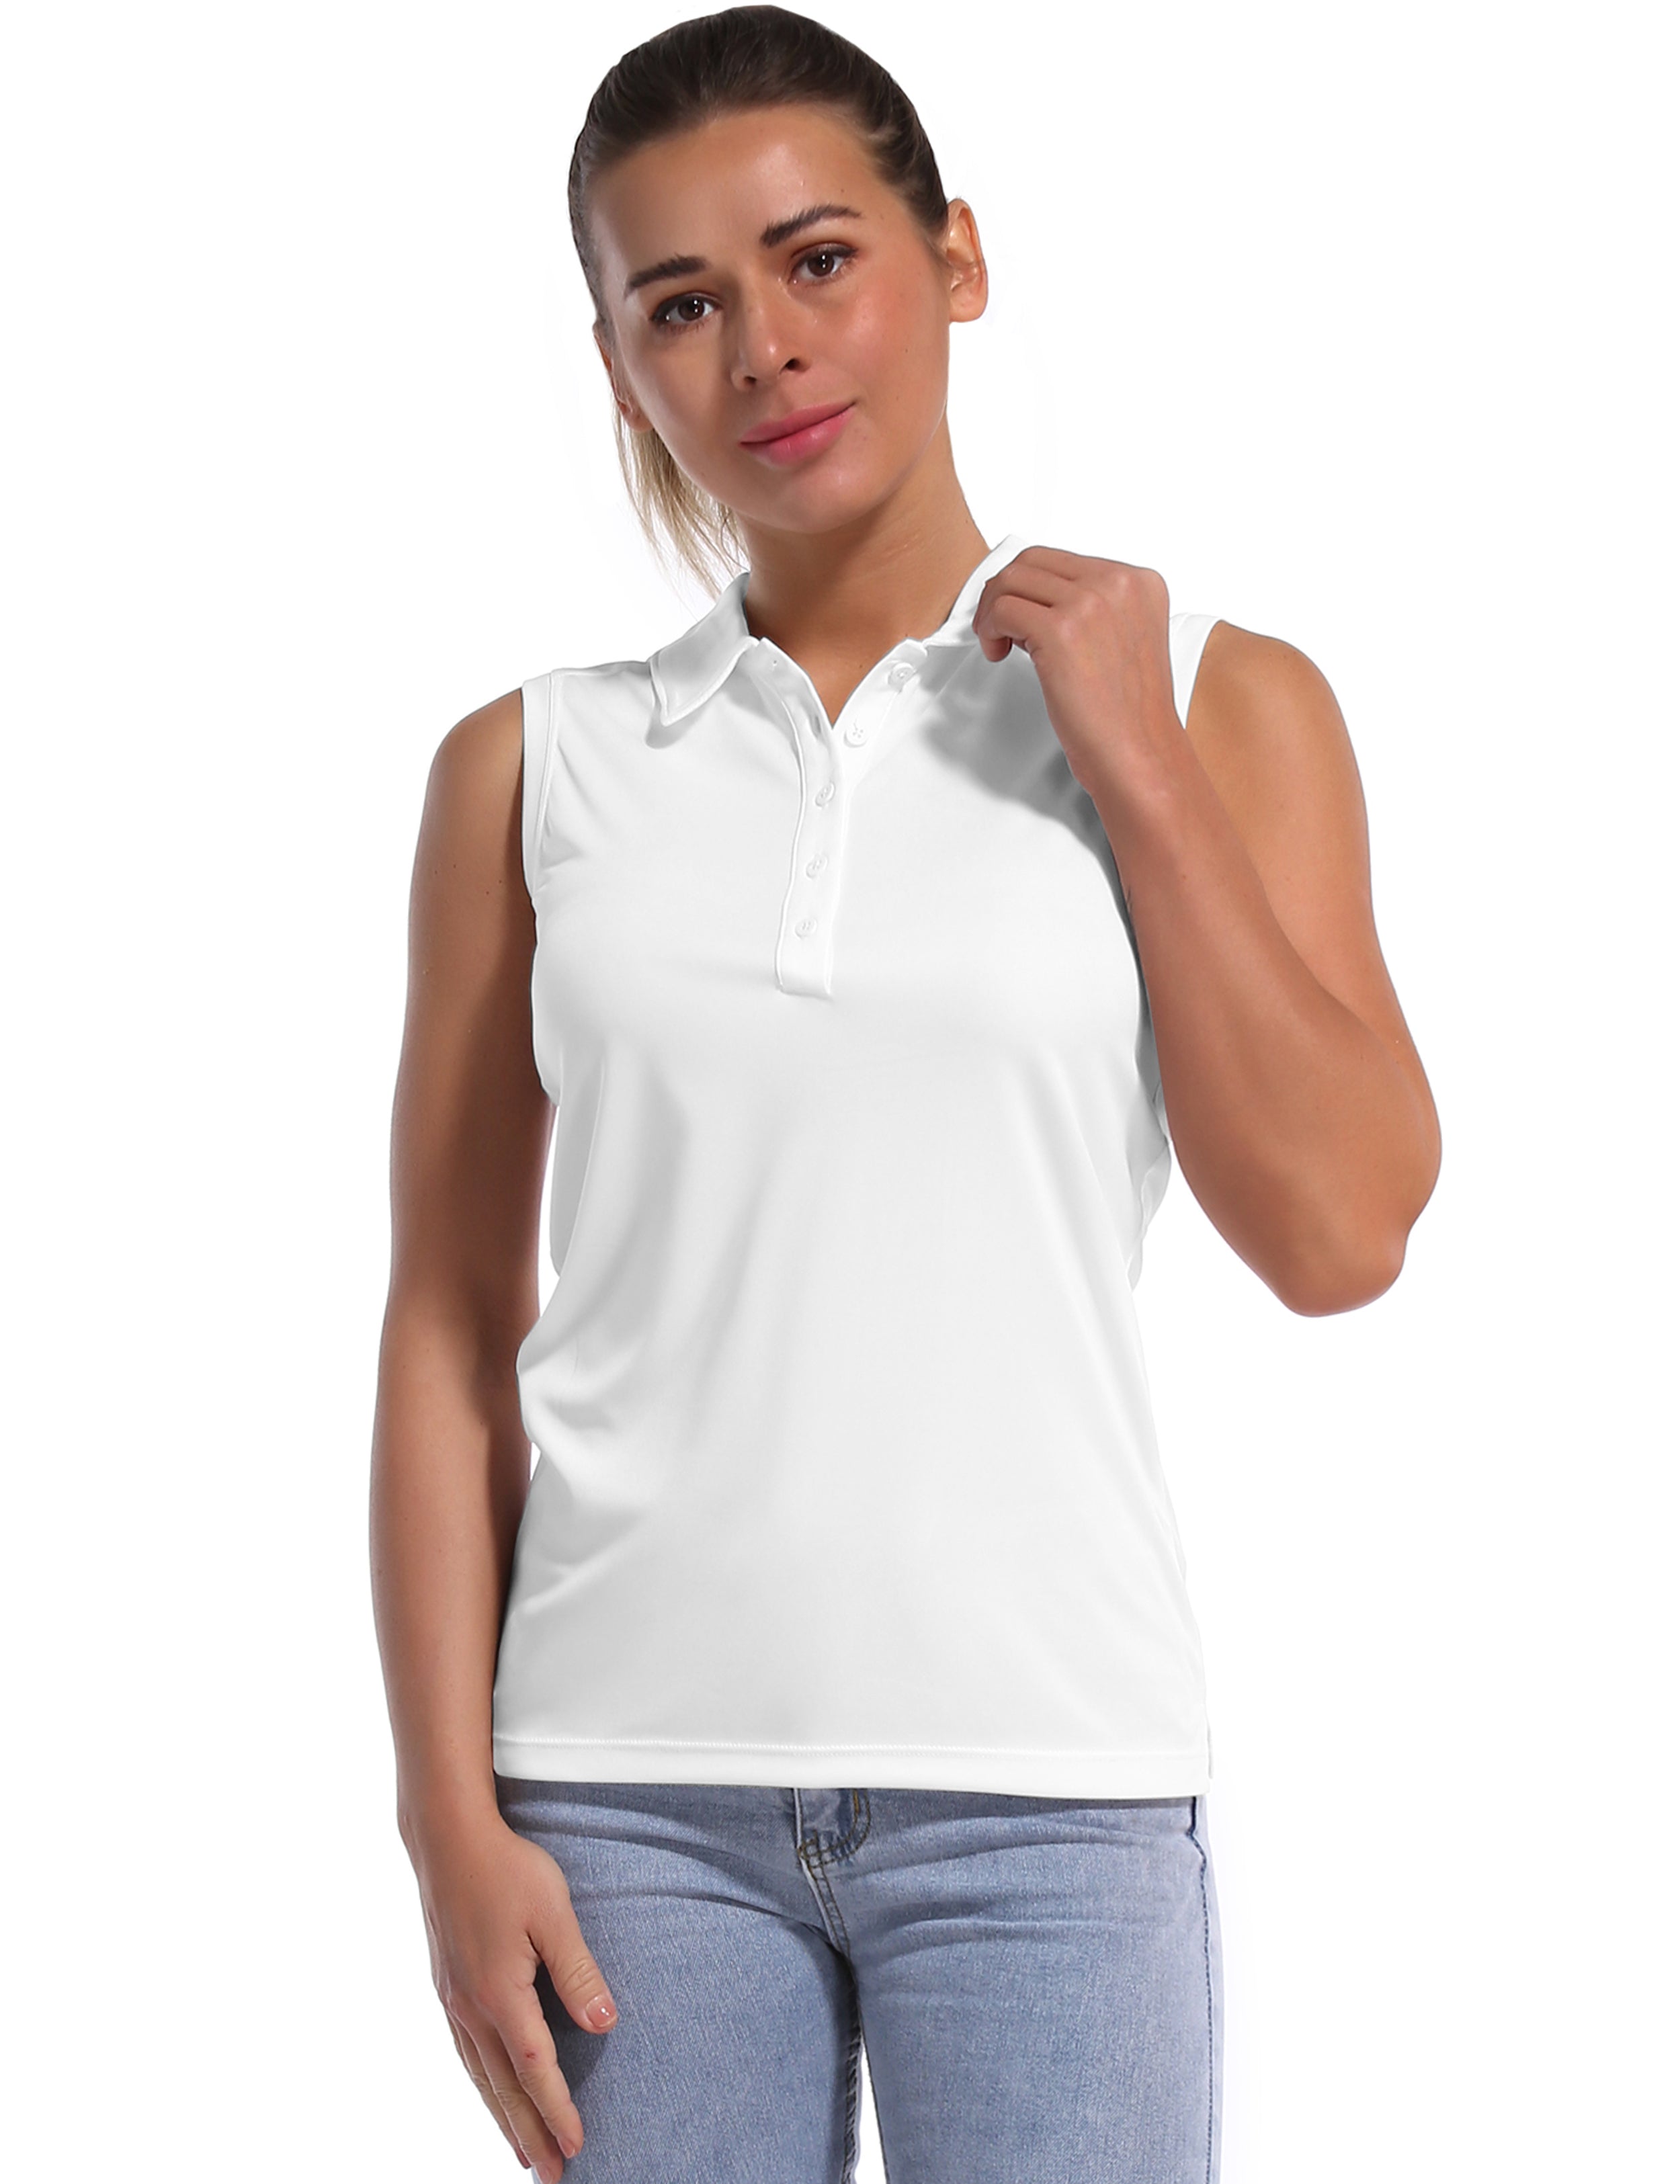 Sleeveless Slim Fit Polo Shirt white_Pilates